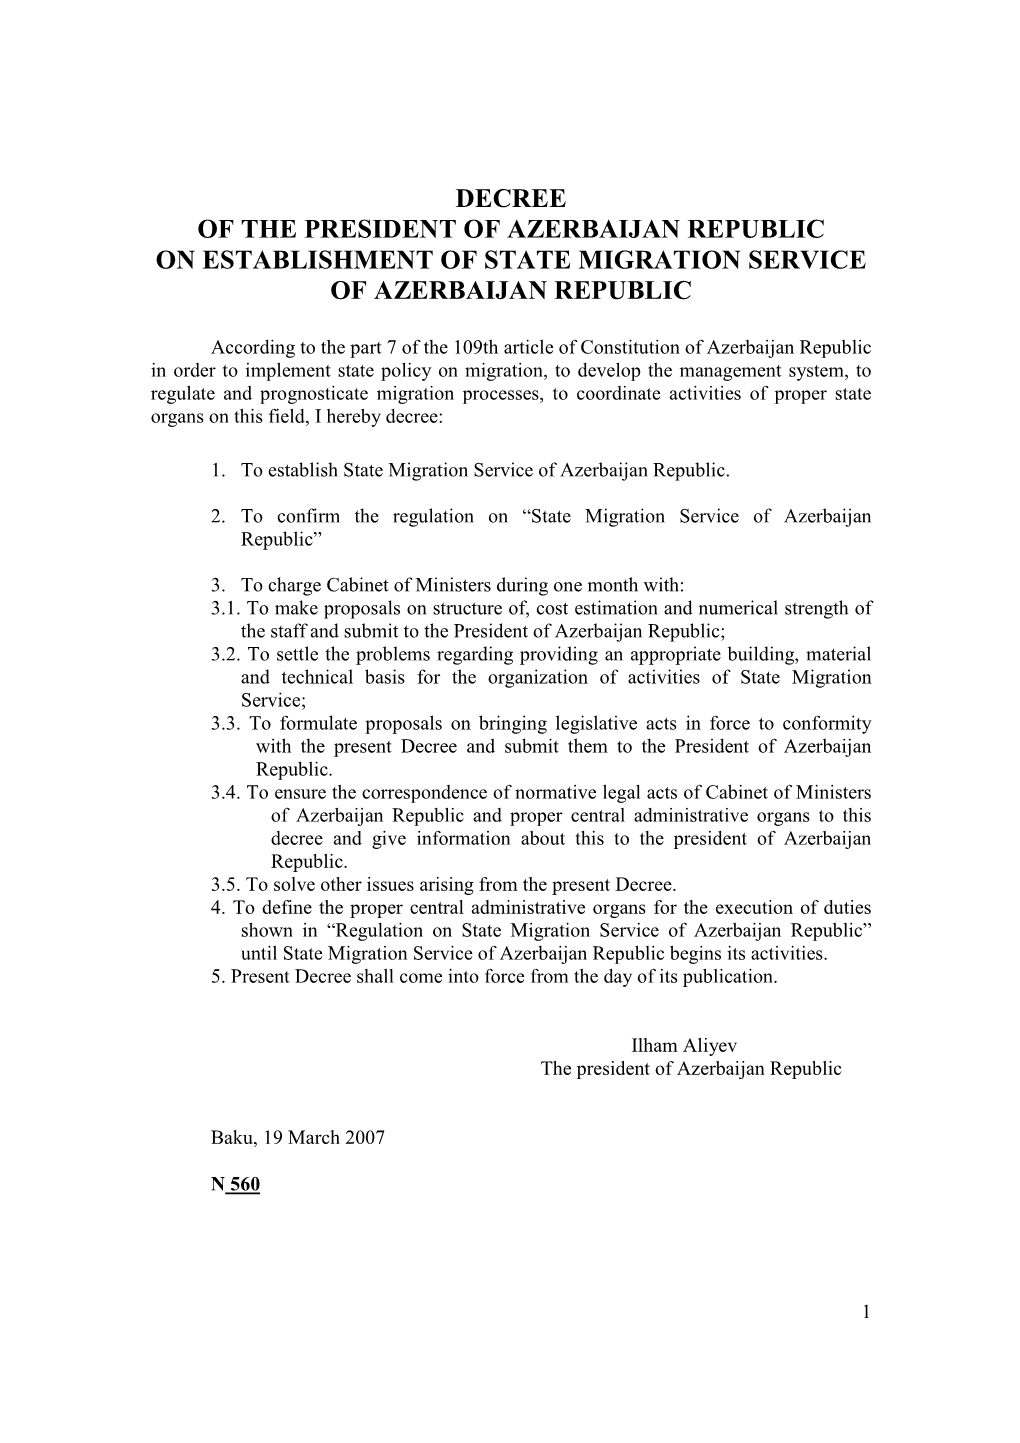 Decree of the President of Azerbaijan Republic on Establishment of State Migration Service of Azerbaijan Republic